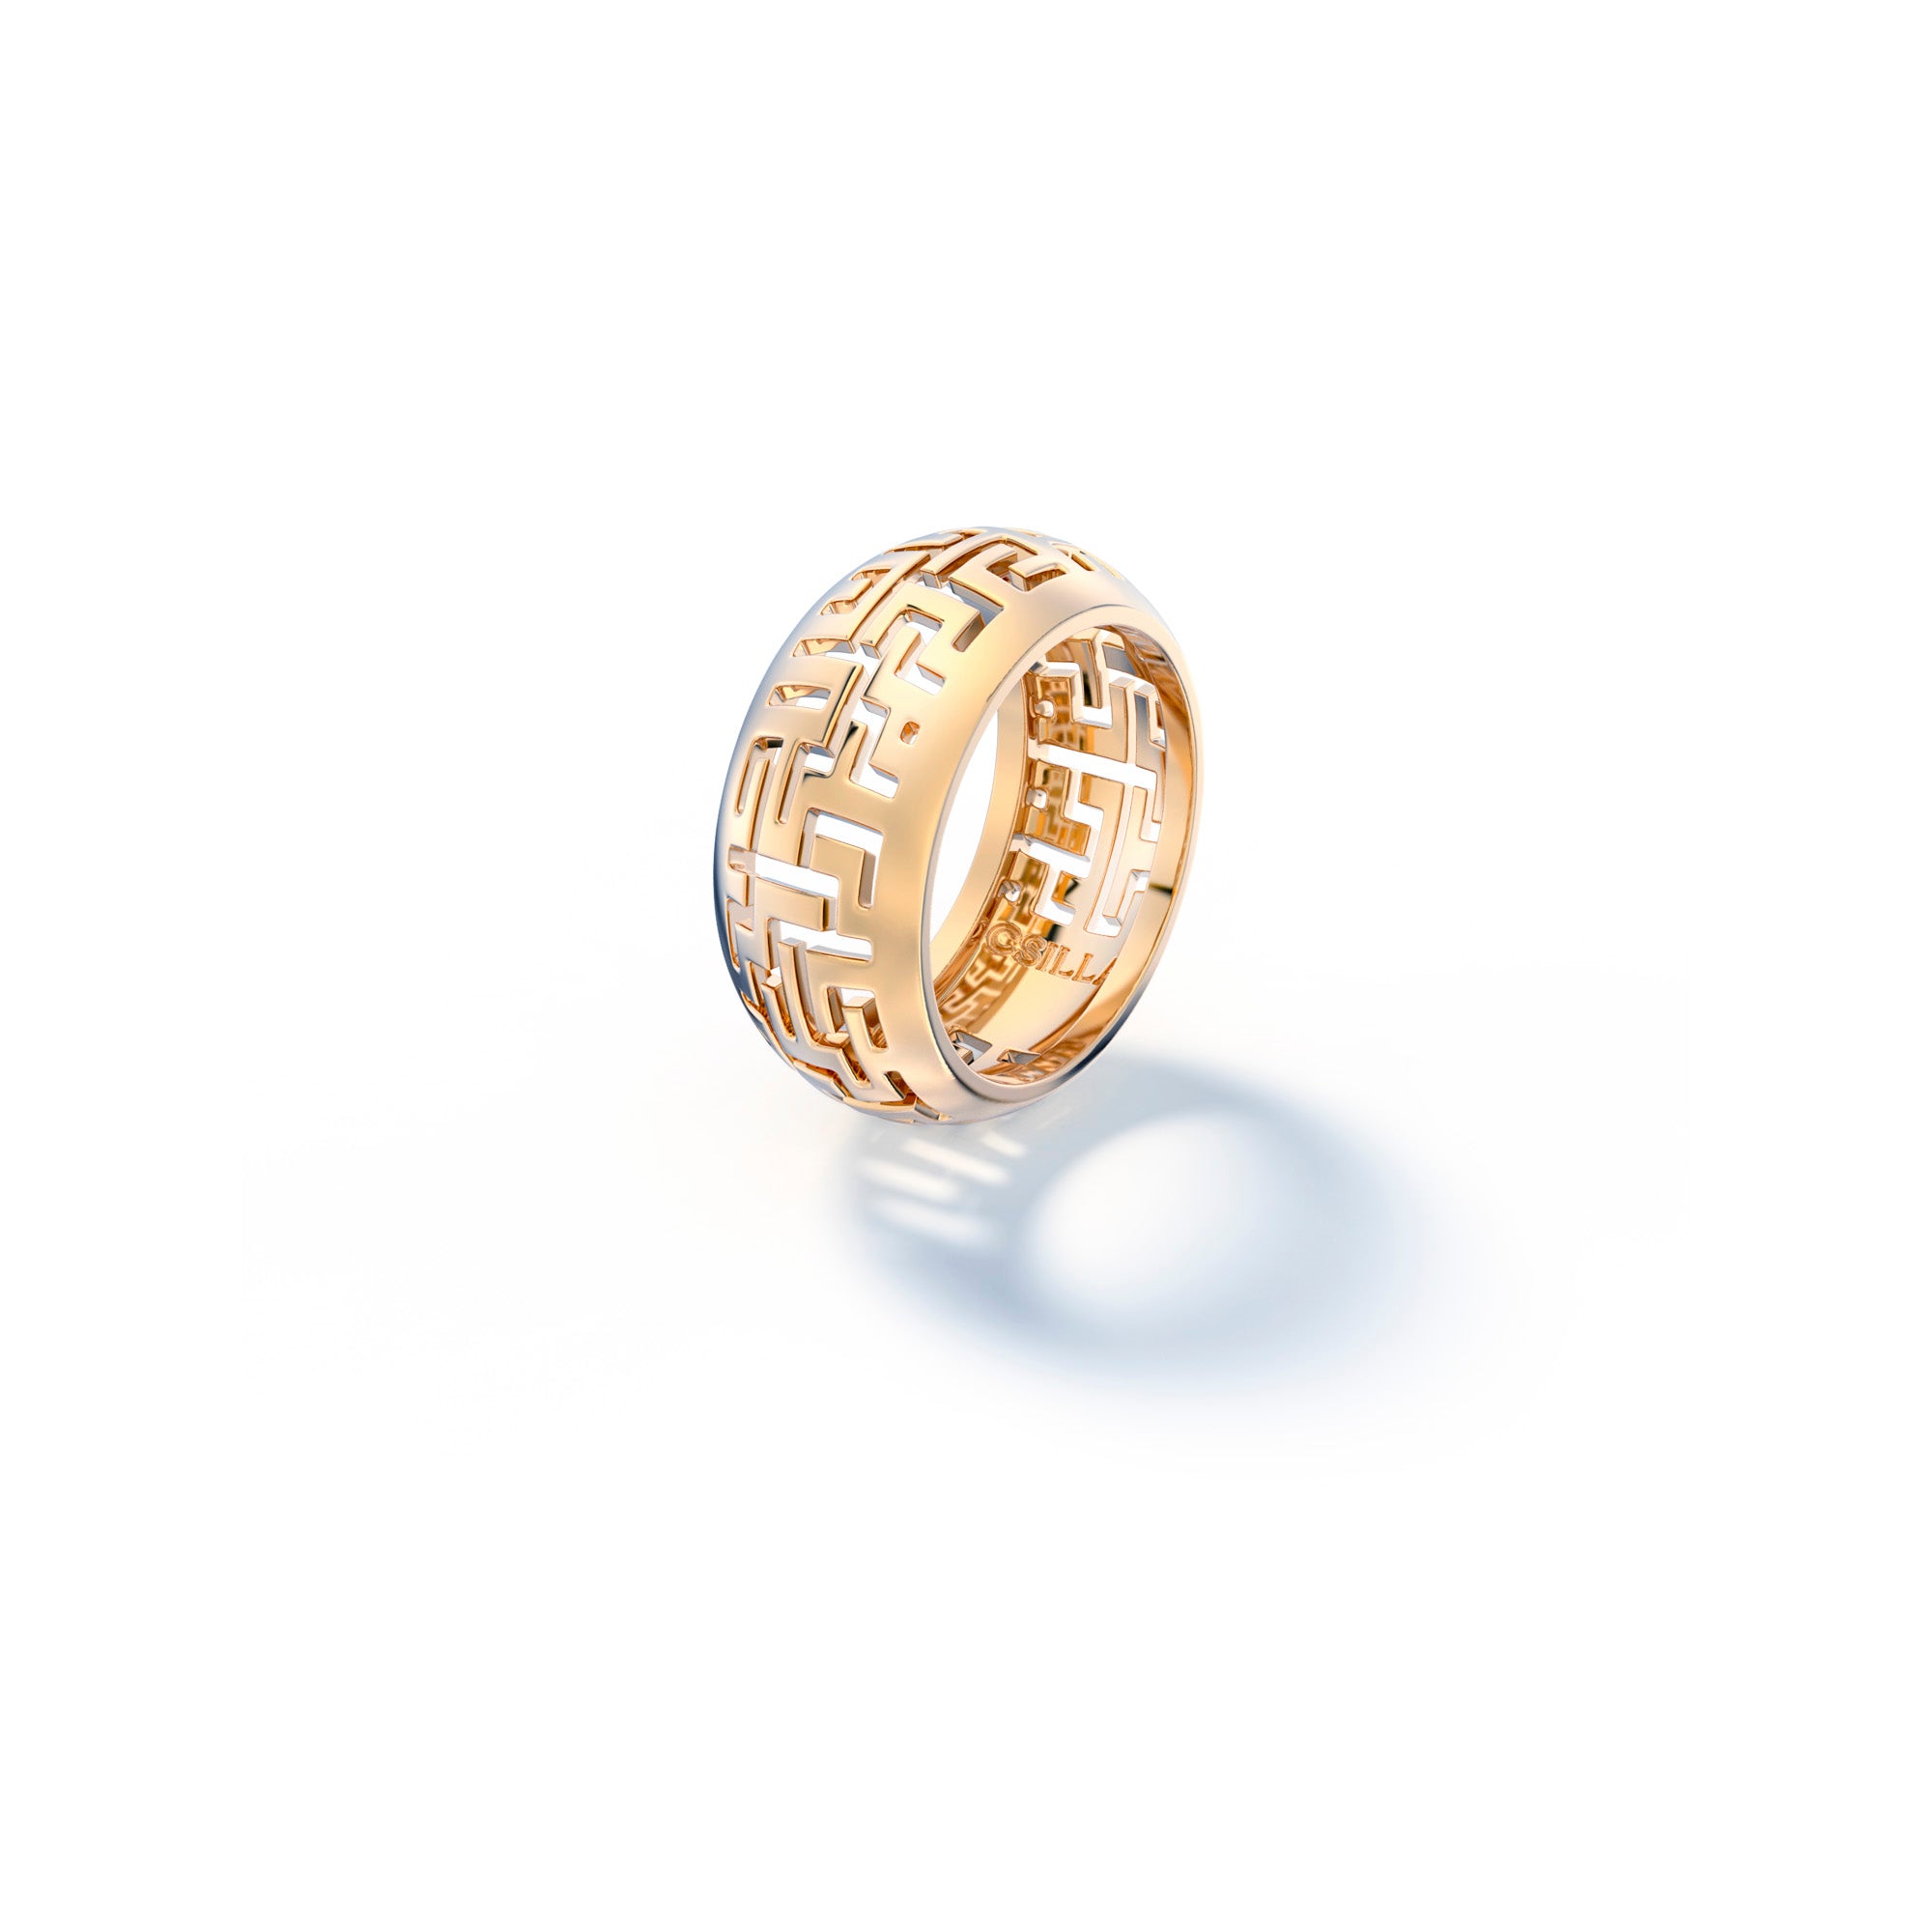 'A-Māz-Me' Gaia White Gold Ring Small